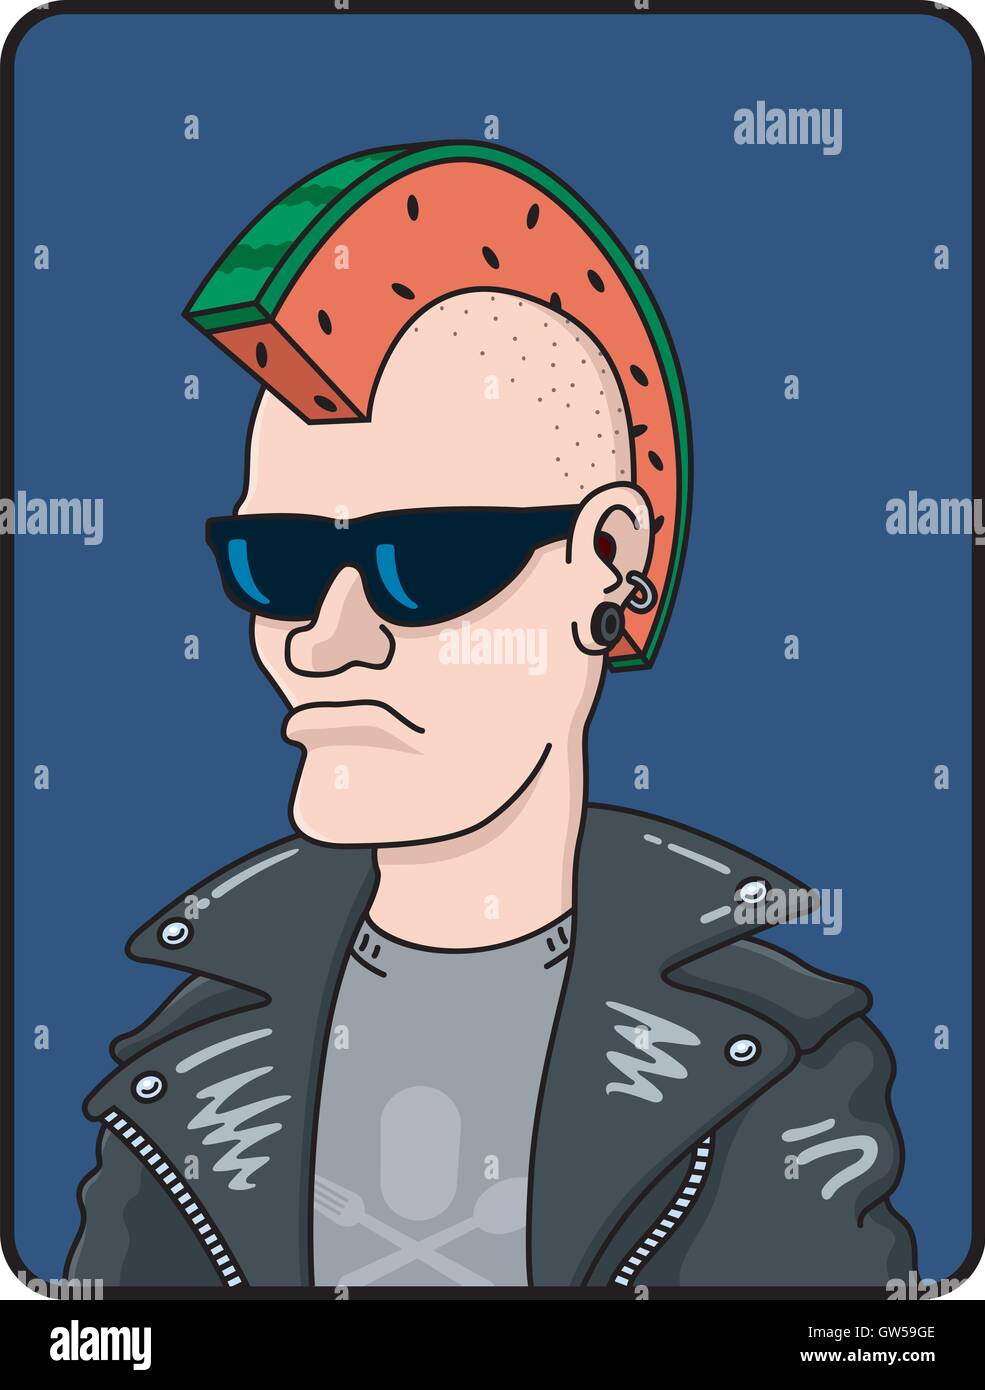 Melon Head Punk Rock Vector Cartoon Illustration. Cartoon punk rocker has a watermelon slice for a mohawk hair cut. Stock Vector